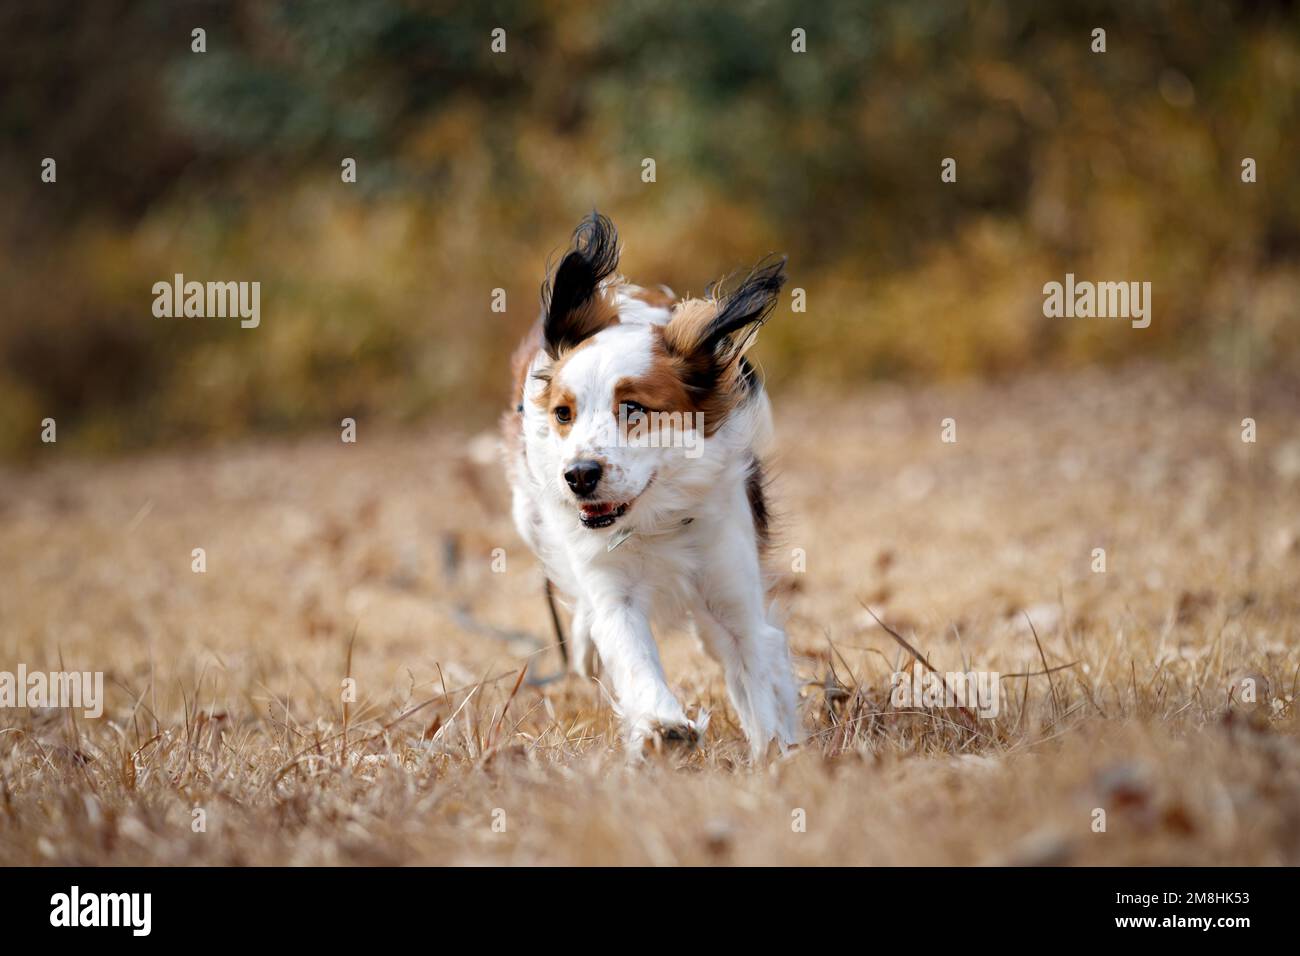 Happy purebred dog kooiker running towards the camera. Stock Photo